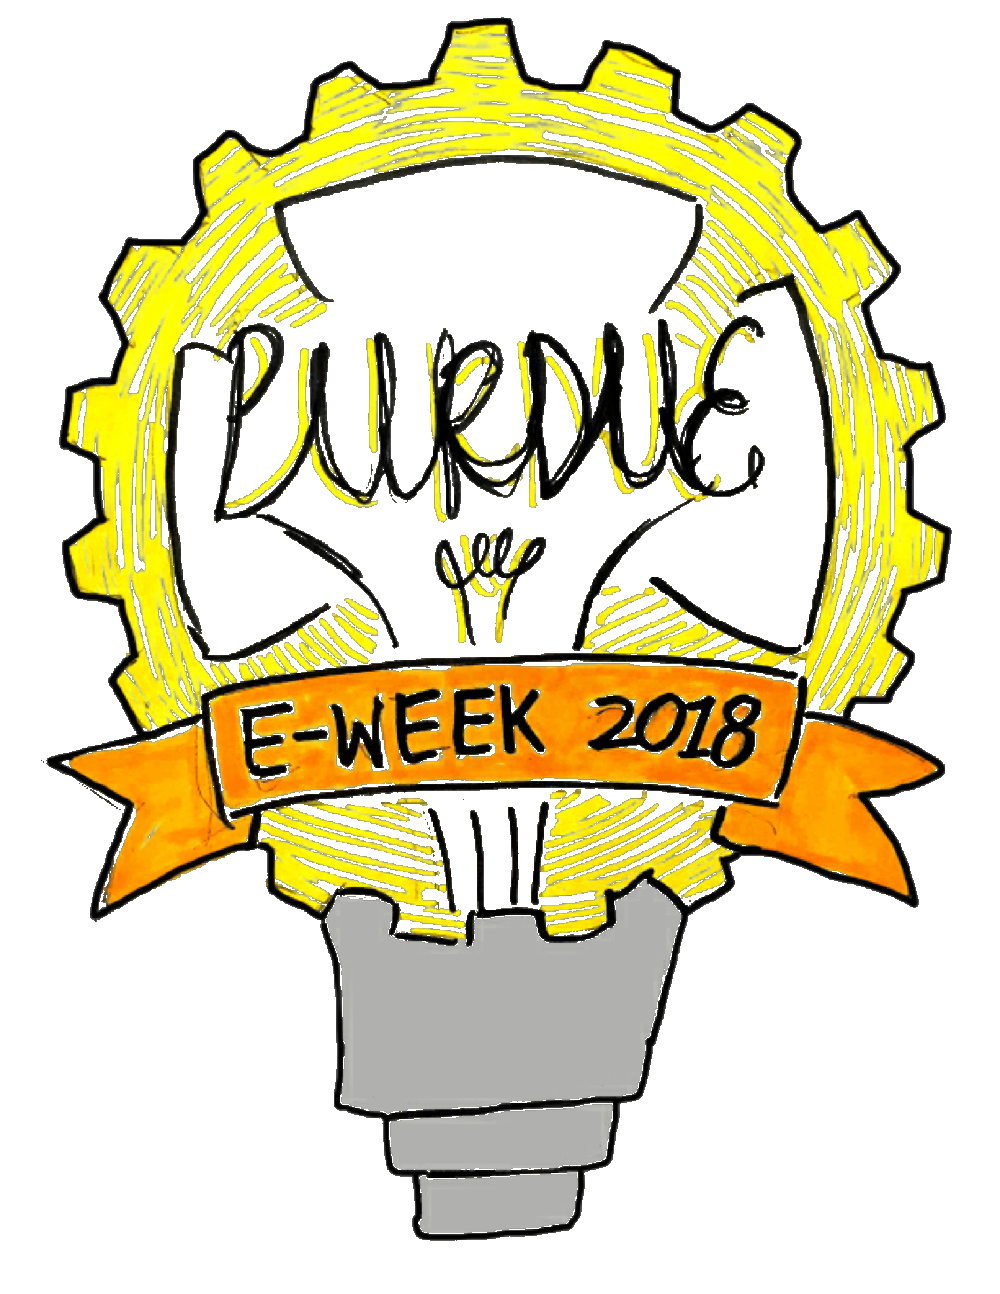 Purdue E-Week 2018 Logo